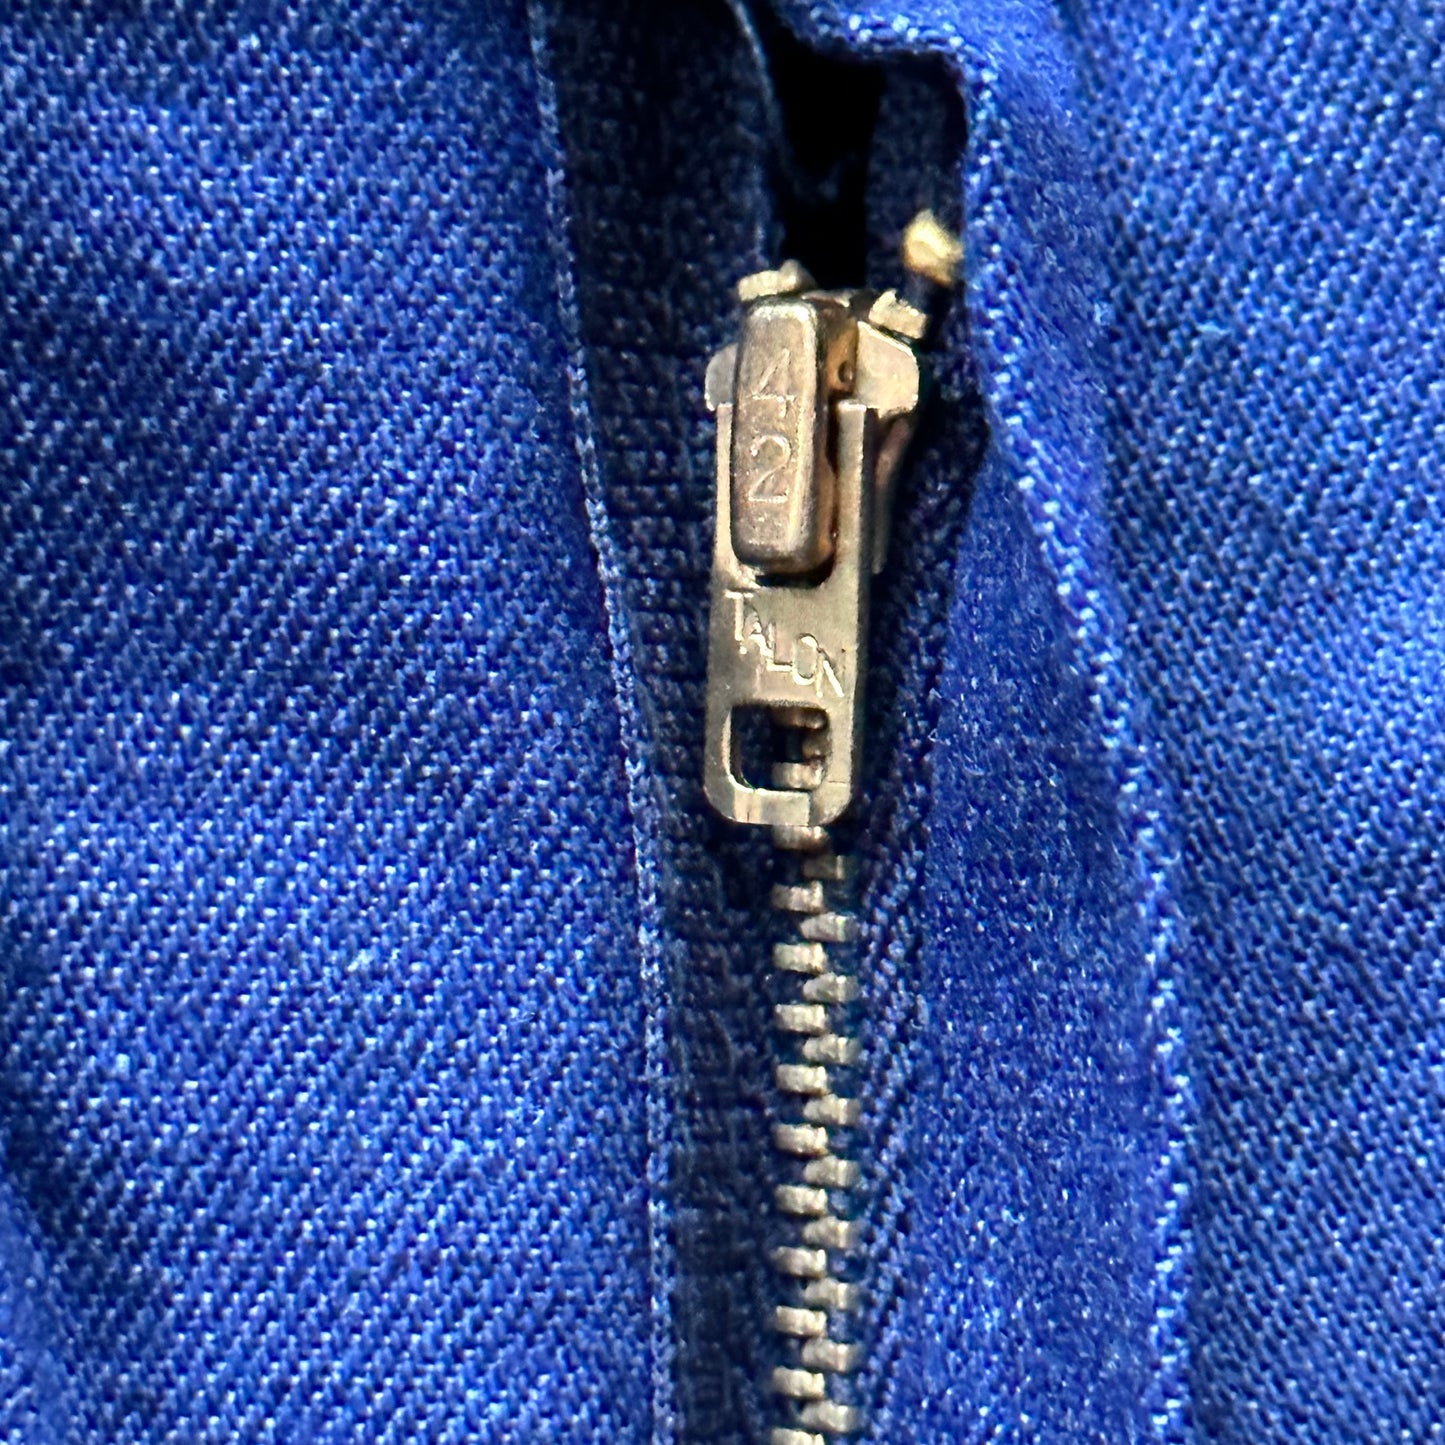 Talon 42 Zip on NOS Vintage Carter's Carpenter Jeans W26 L32 | Vintage Workwear Seattle | Barn Owl Vintage Clothing